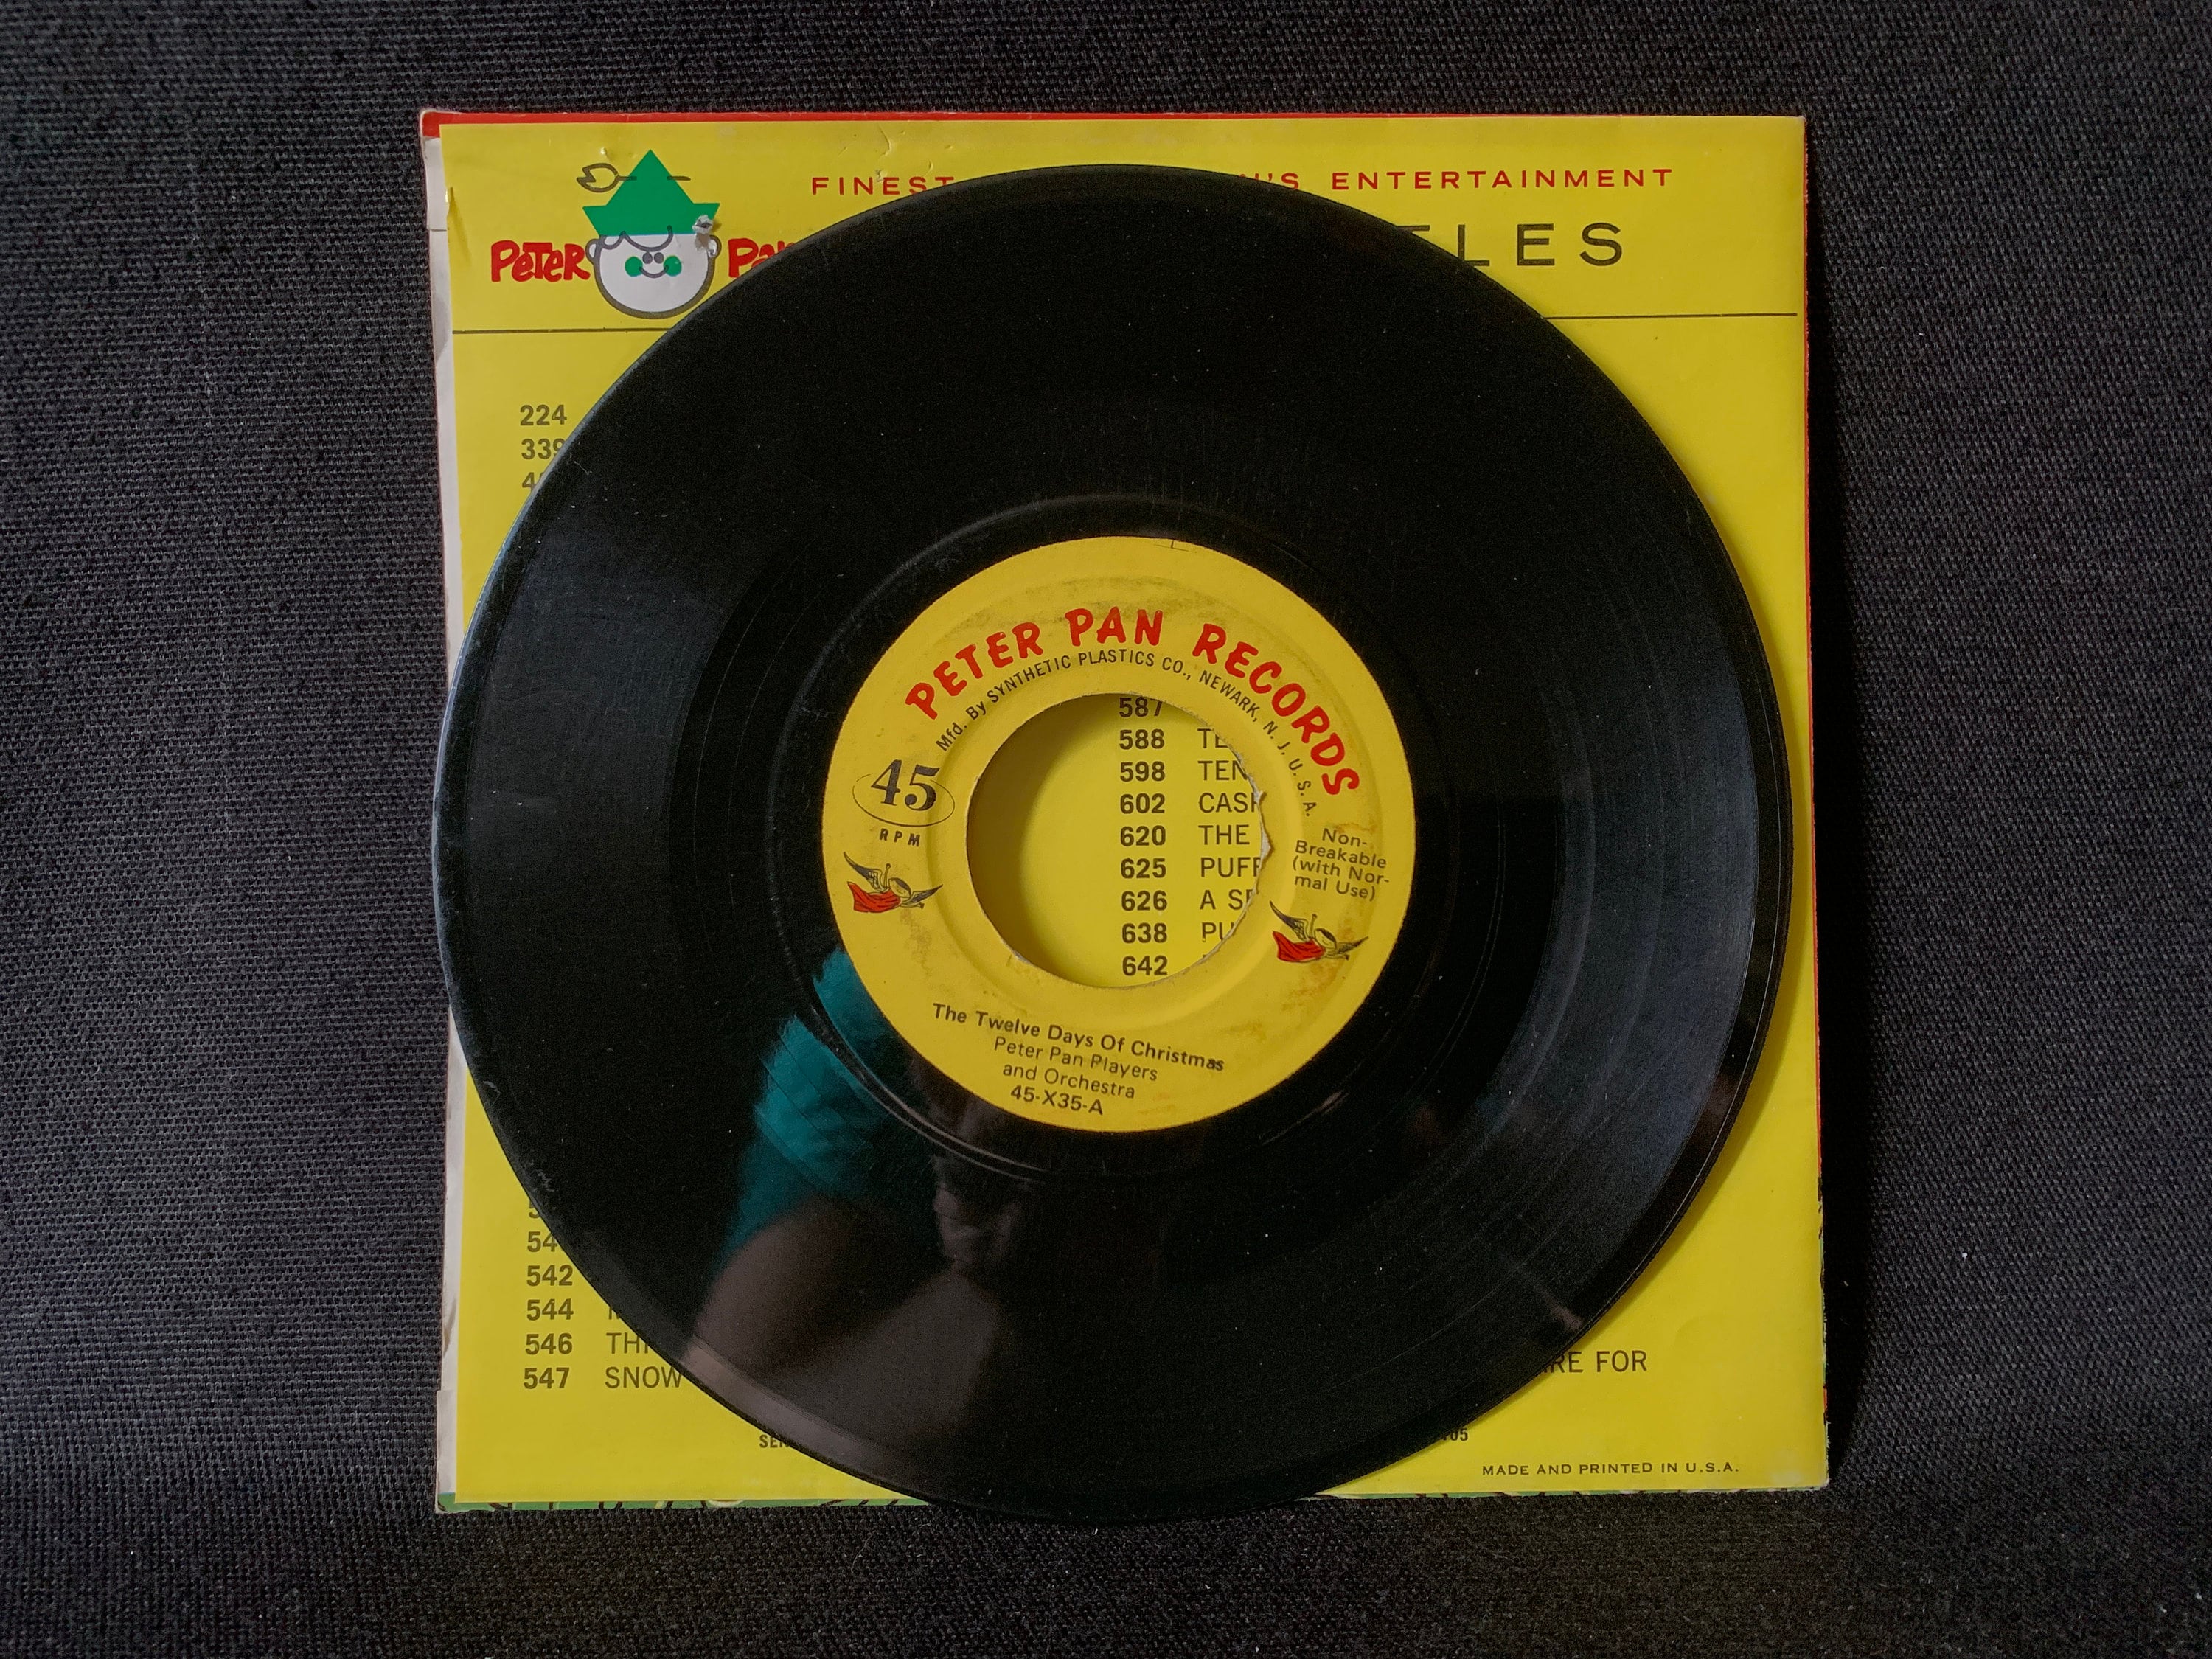 Vintage Vinyl Records, 3 Vinyl Records, 1950s, 1980s, Peter Pan